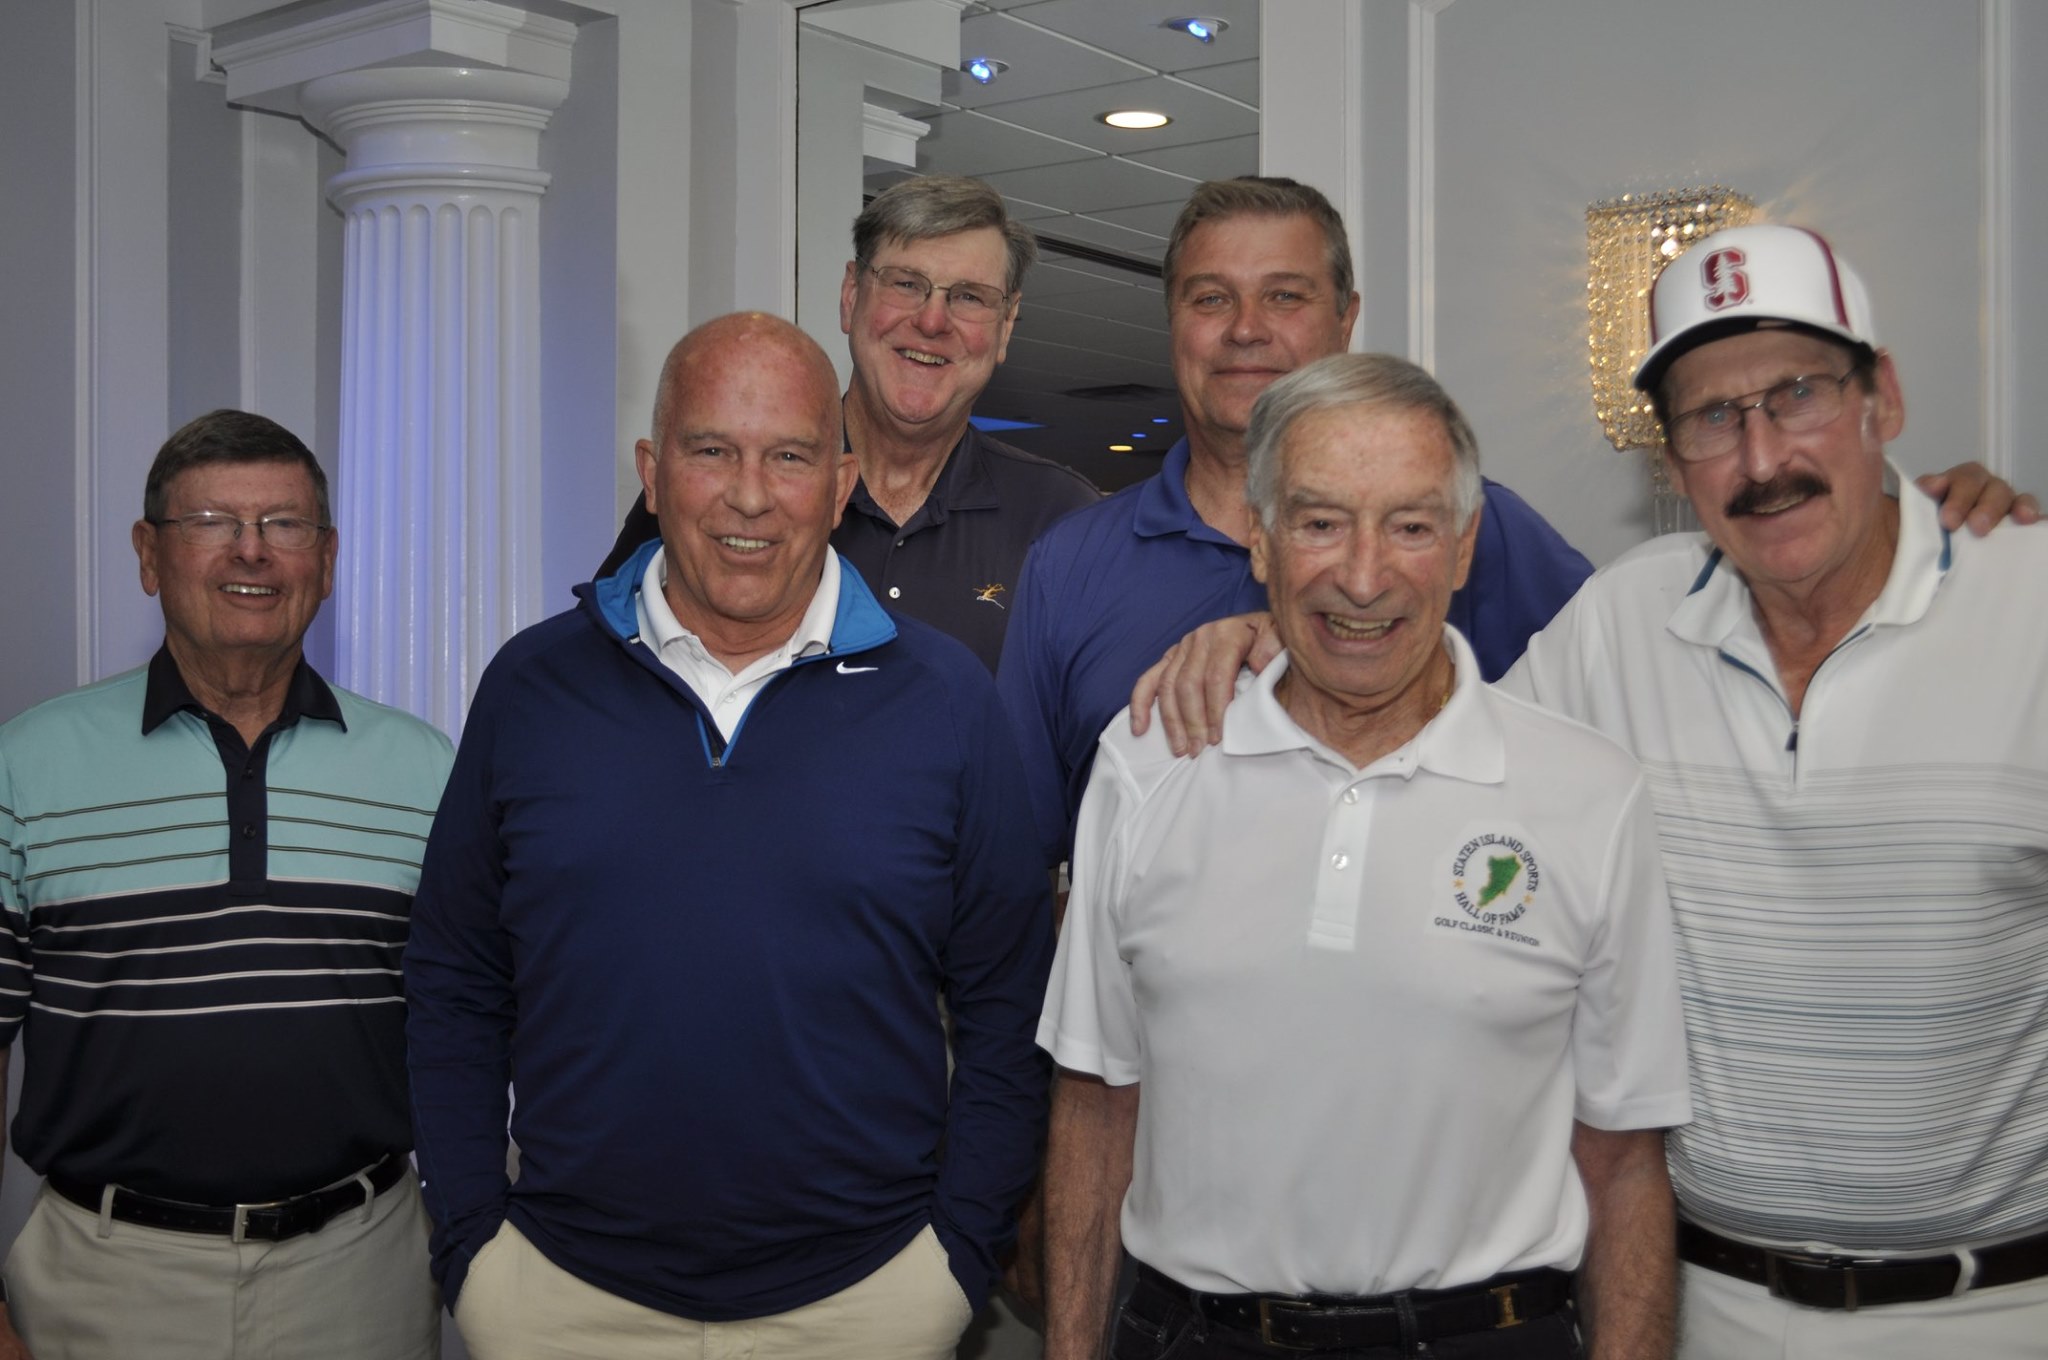 Bobby Thomson Ambassador Award winners Larry Anderson, Jay Price, John Engles, Ray Rudolph, Bert Levinson and Dan McDermott.